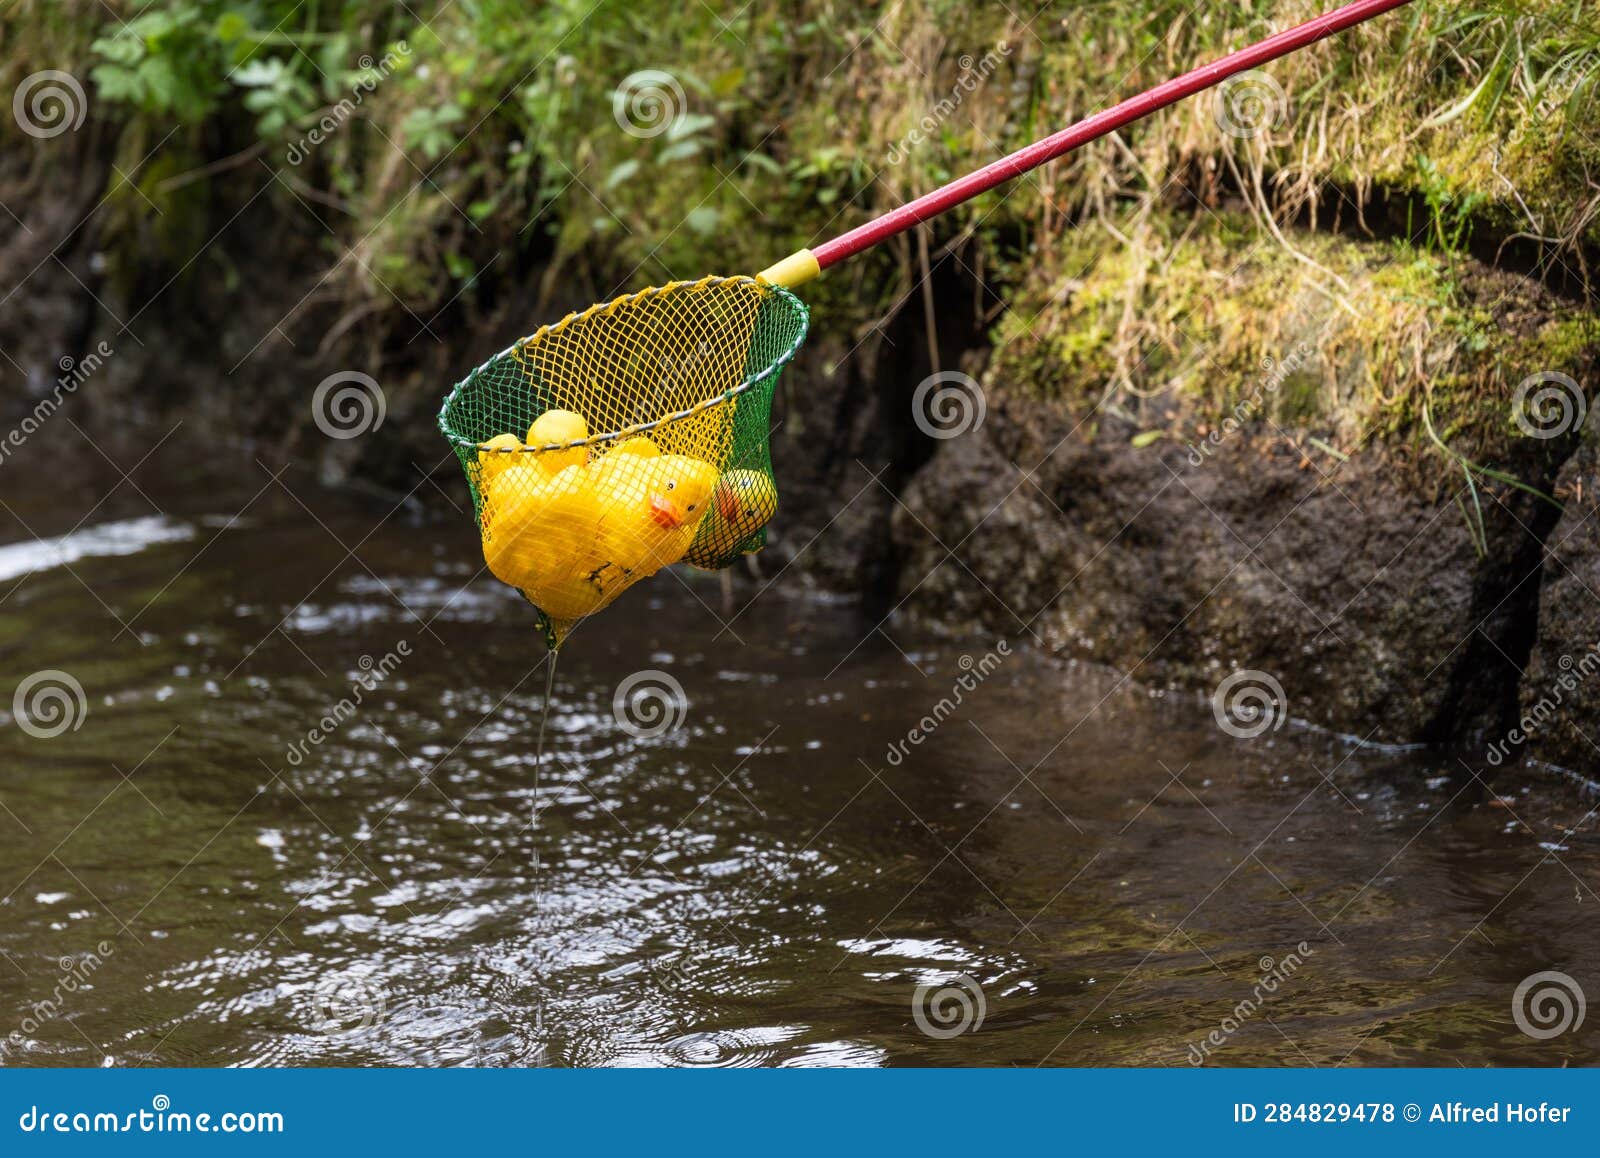 https://thumbs.dreamstime.com/z/caught-yellow-rubber-ducks-landing-net-children-s-toy-yellow-rubber-duck-caught-water-fishing-net-284829478.jpg